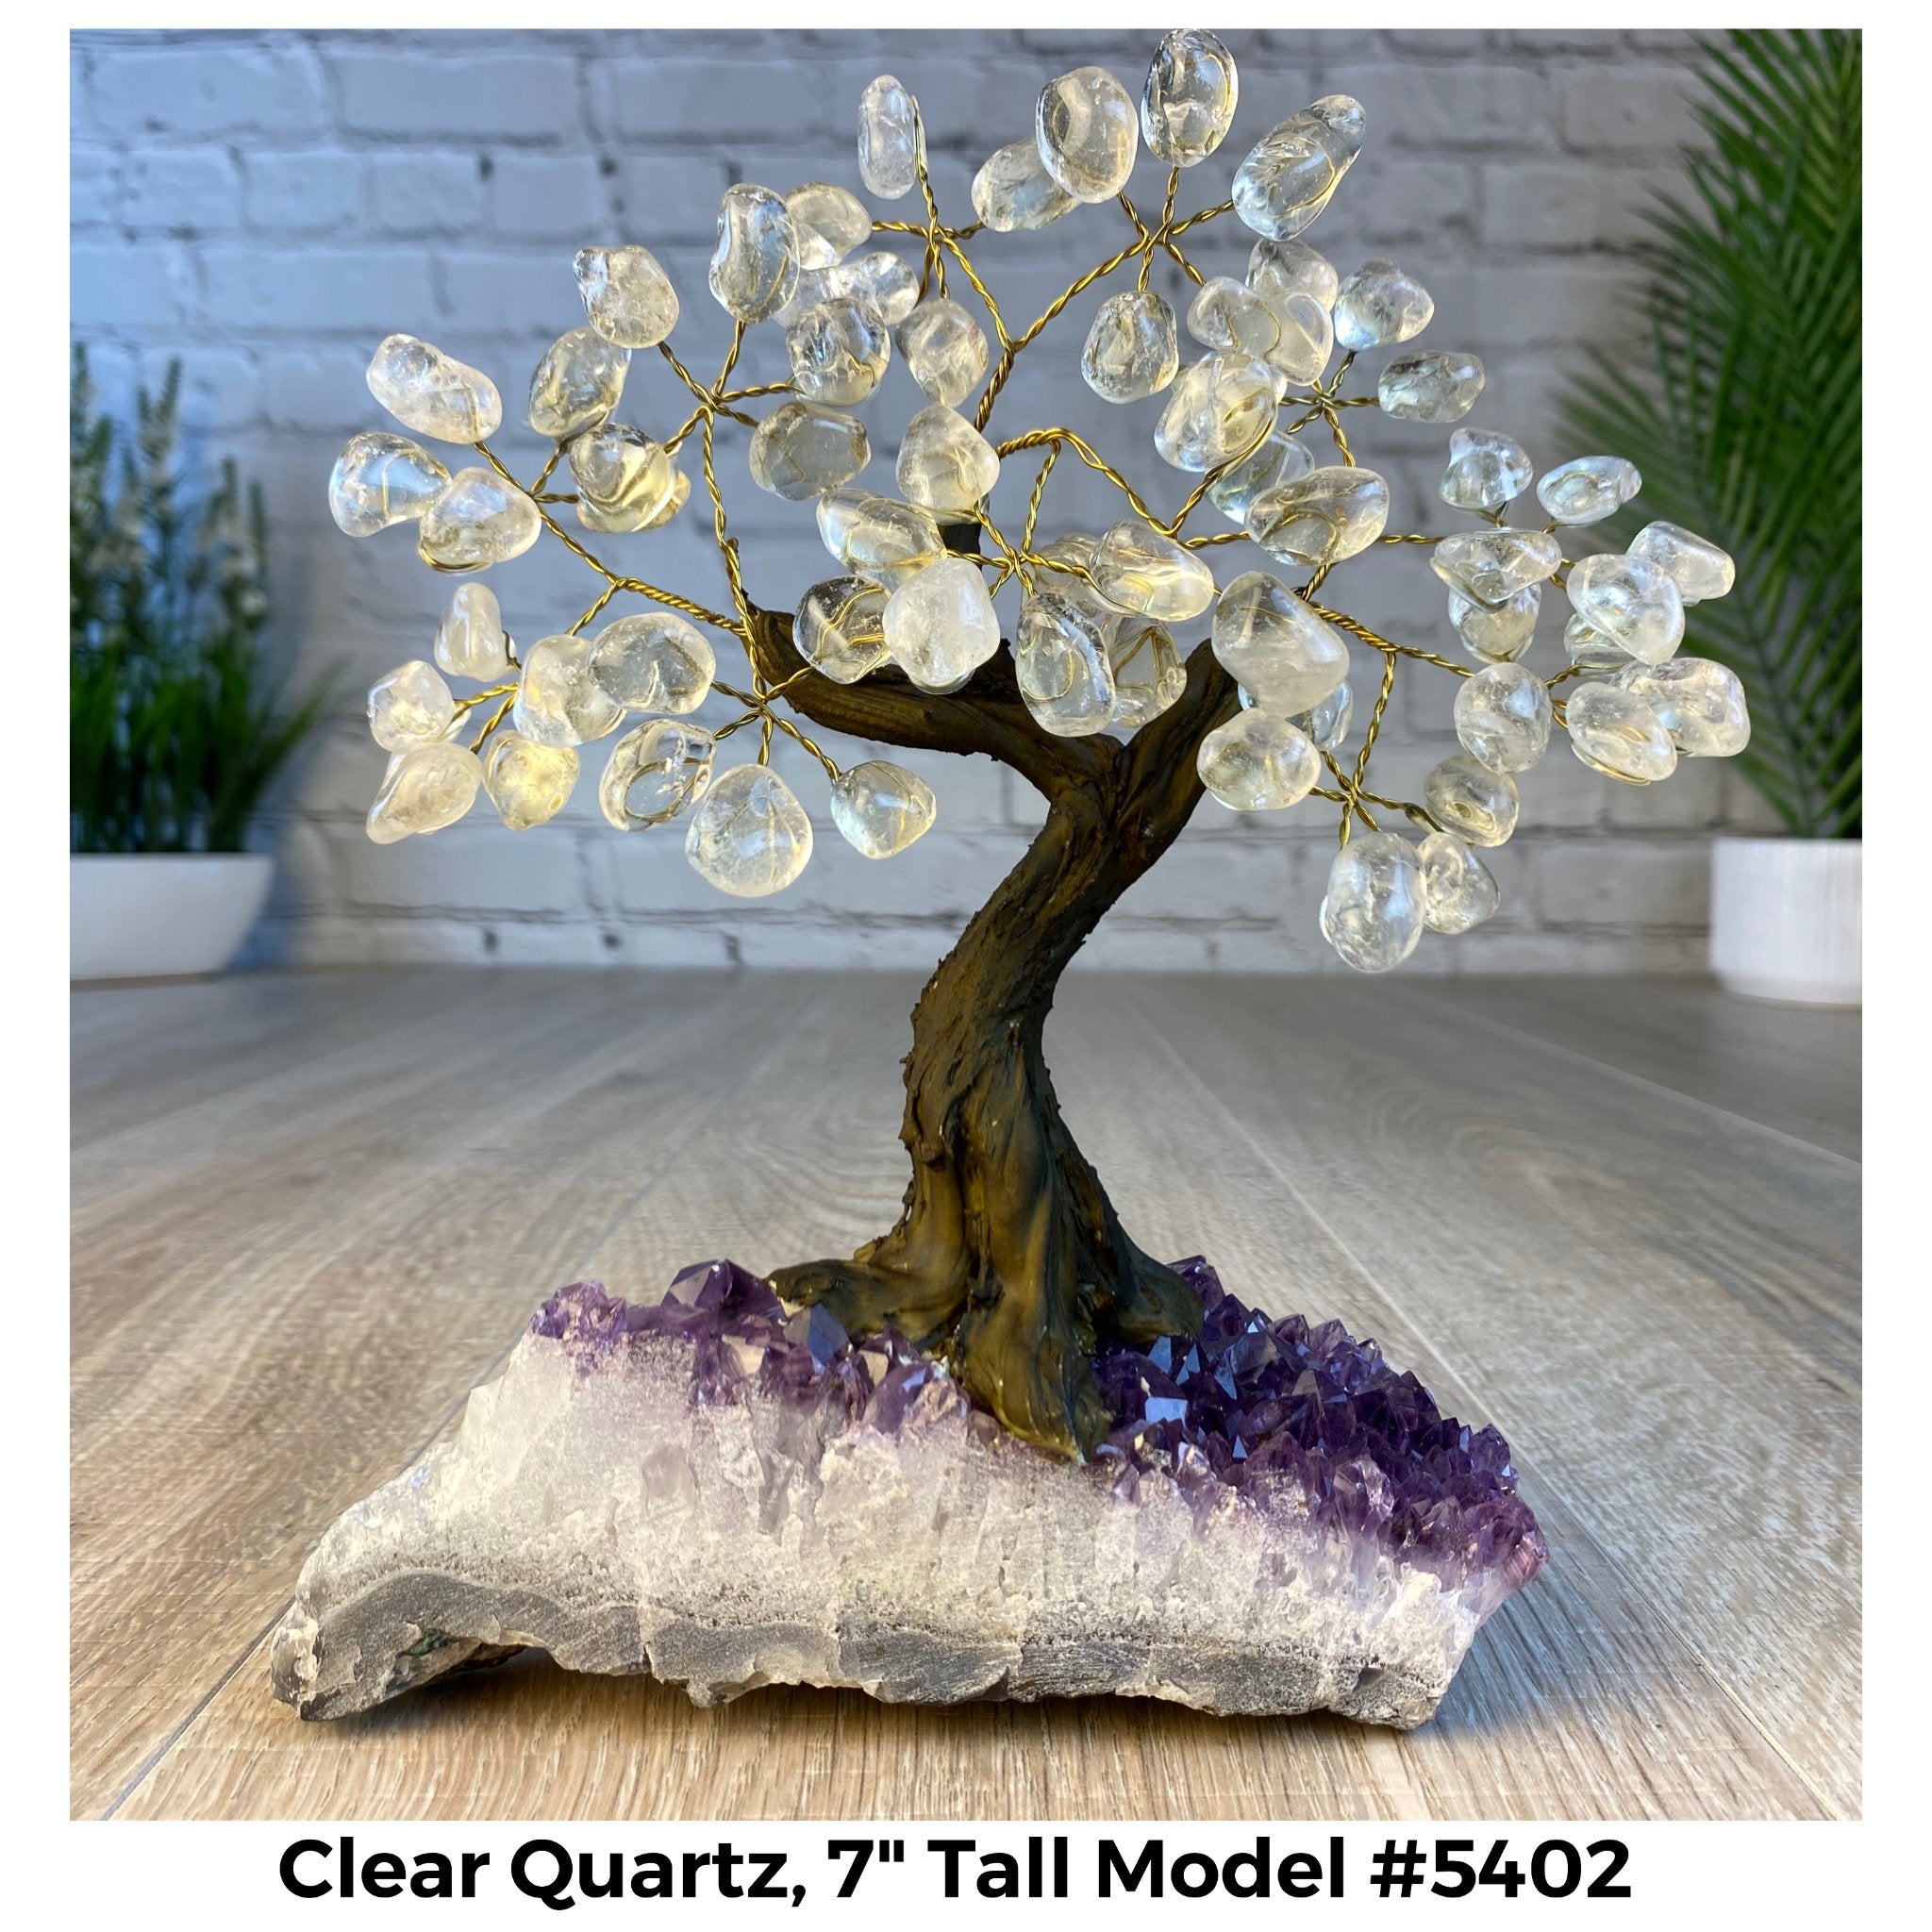 Clear Quartz 7" Tall Handmade Gemstone Tree on a Crystal base, 60 Gems #5402CLRQ - Brazil GemsBrazil GemsClear Quartz 7" Tall Handmade Gemstone Tree on a Crystal base, 60 Gems #5402CLRQGemstone Trees5402CLRQ